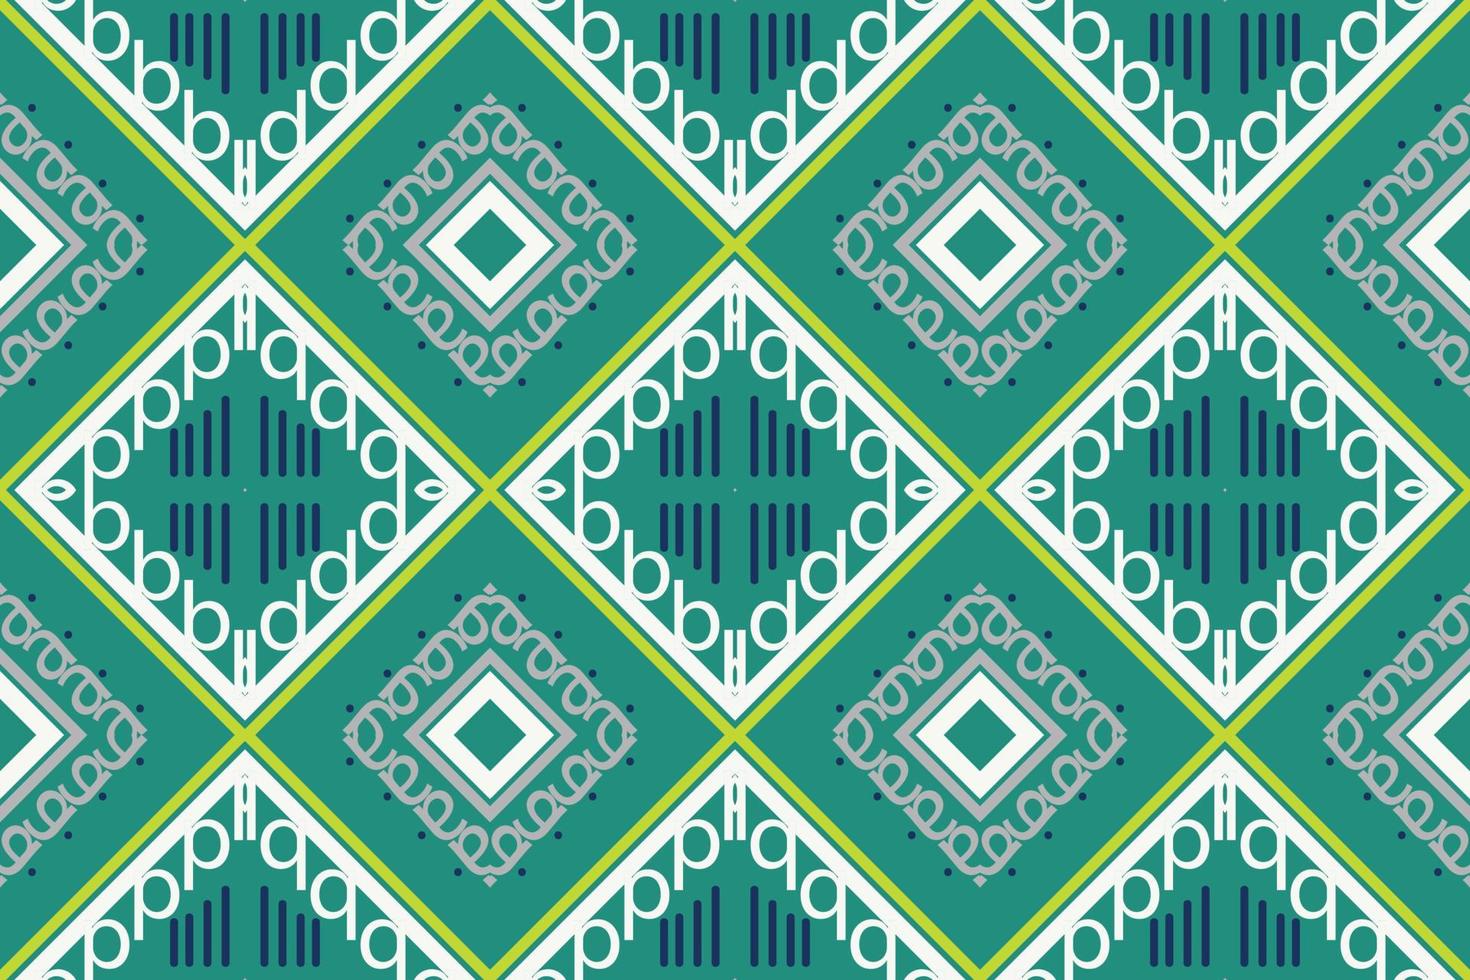 étnico azteca ikat patrón sin costuras textil ikat floral patrón sin costuras diseño de vector digital para imprimir saree kurti borneo tela azteca cepillo símbolos muestras elegante